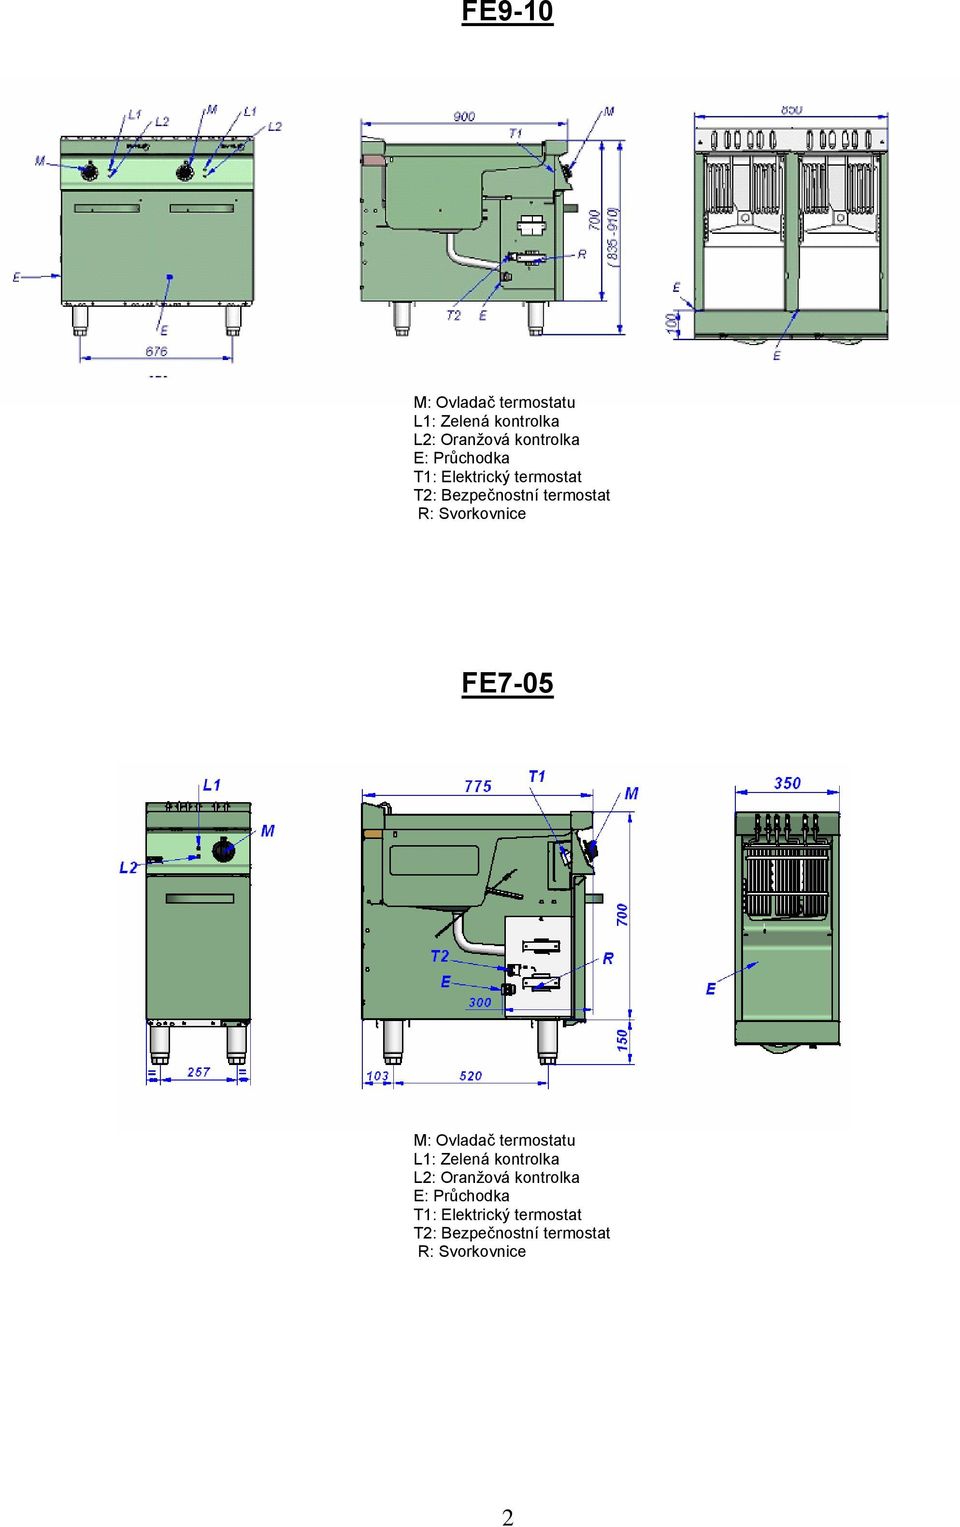 FE7-05 M: Ovladač termostatu L1: Zelená kontrolka L2: Oranžová kontrolka E: 